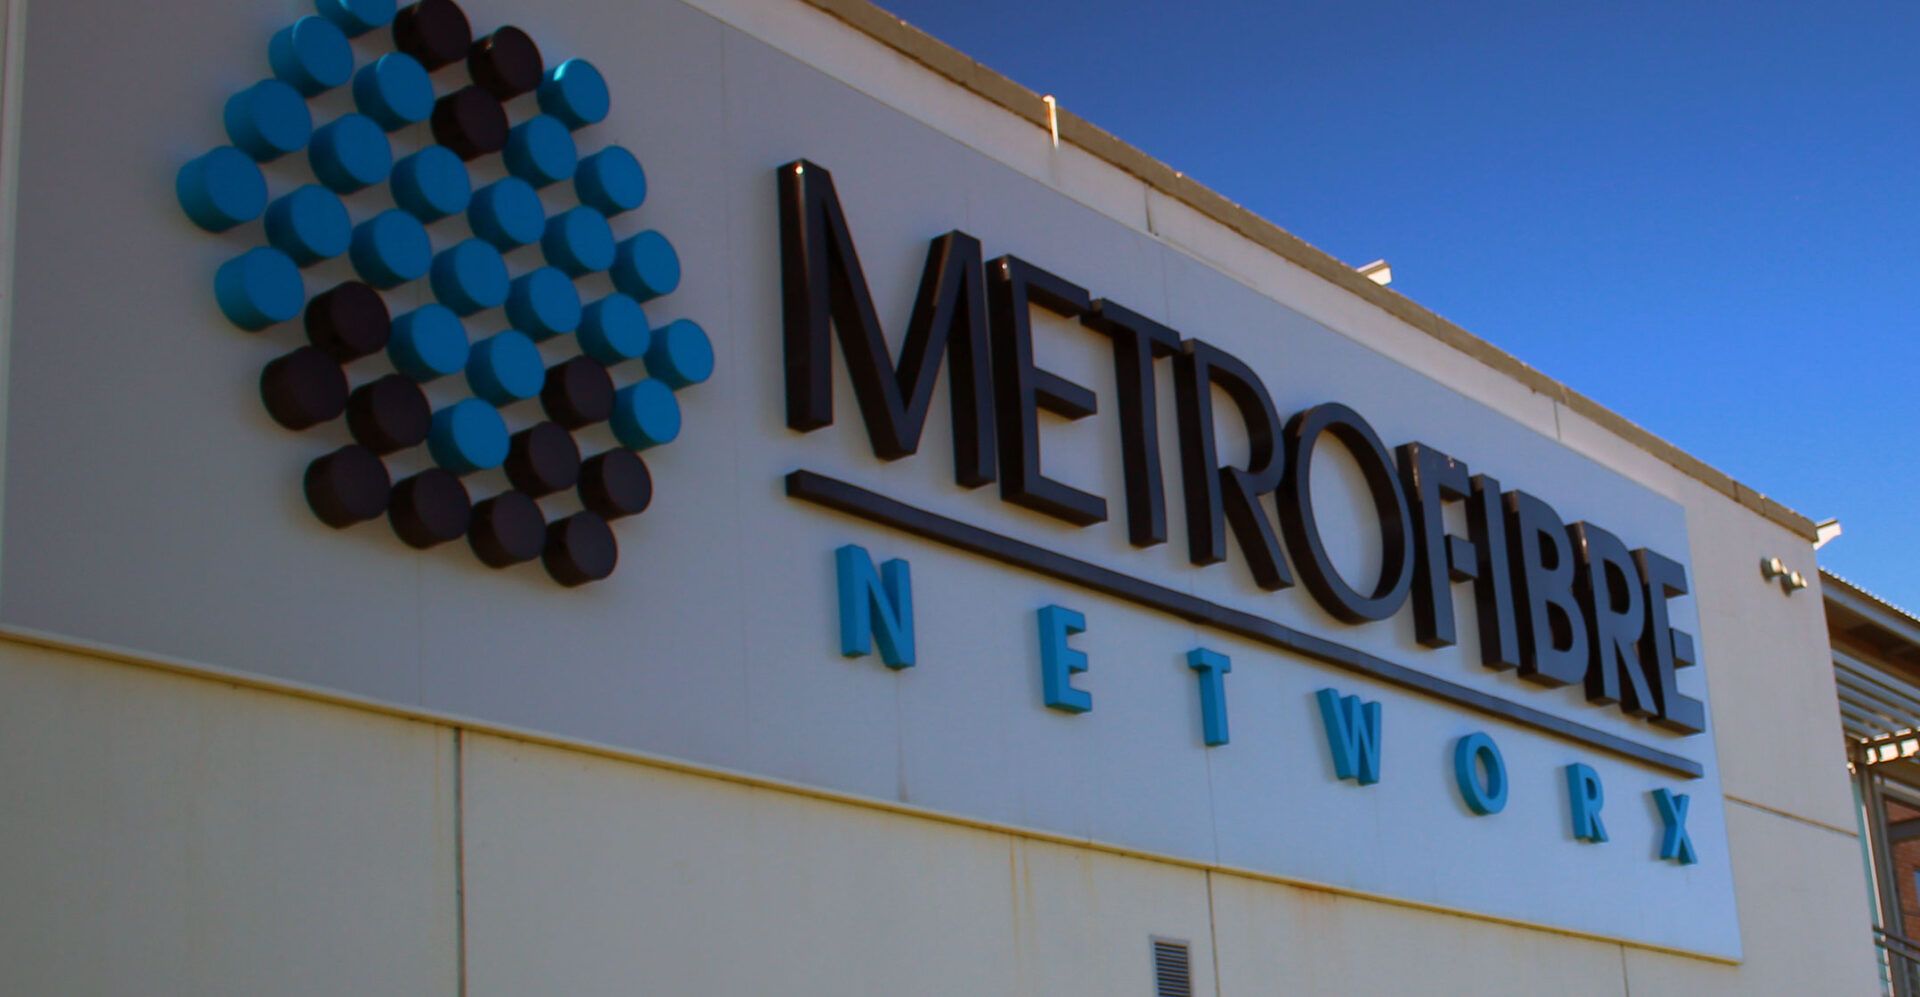 Telkom Sue MetroFibre Networx for Illegally Accessing its Fiber